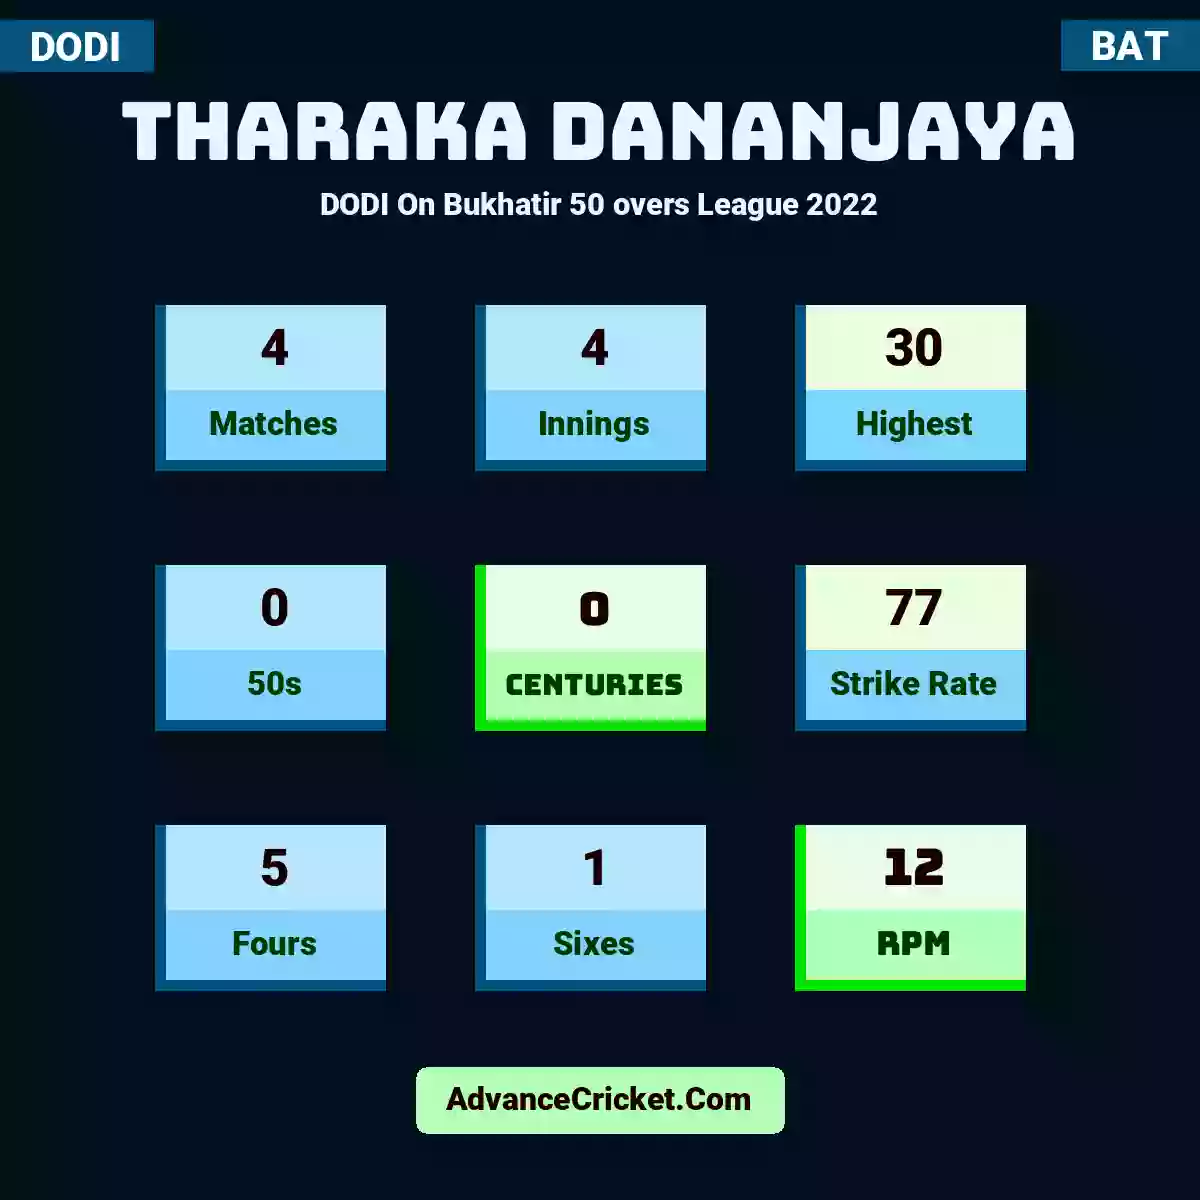 Tharaka Dananjaya DODI  On Bukhatir 50 overs League 2022, Tharaka Dananjaya played 4 matches, scored 30 runs as highest, 0 half-centuries, and 0 centuries, with a strike rate of 77. T.Dananjaya hit 5 fours and 1 sixes, with an RPM of 12.